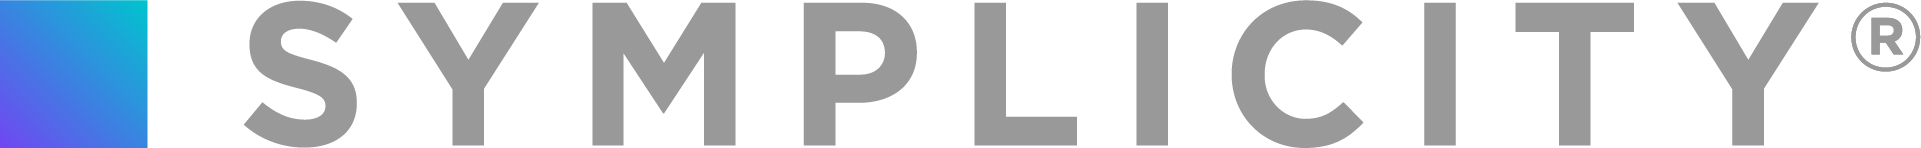 logo_digital_symplicity_reg_gradient-sq-1